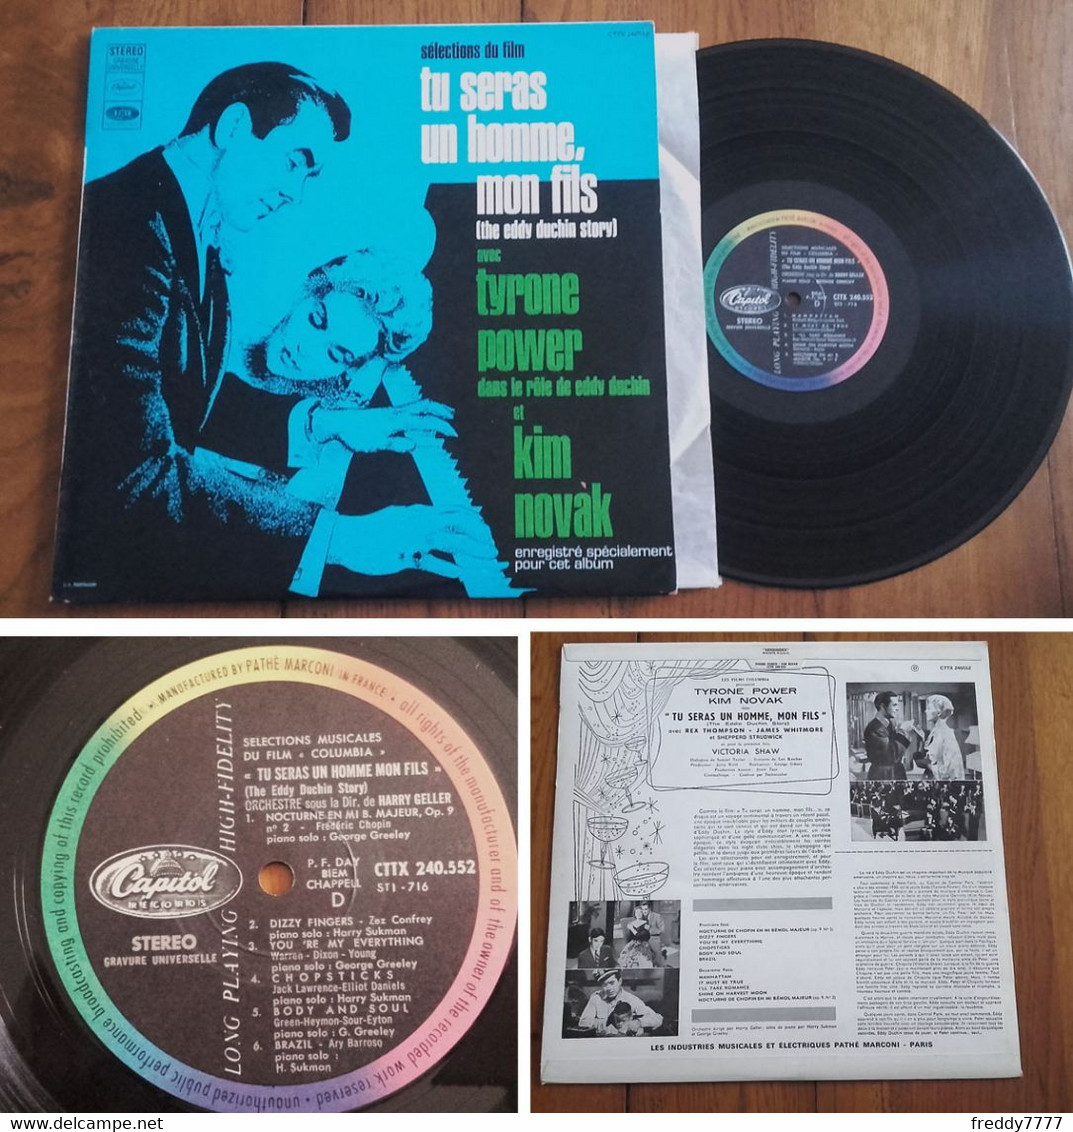 RARE French LP 33t RPM BIEM (12") BOF OST «TU SERAS UN HOMME MON FILS» («The Eddy Ducin Story», 1966) - Soundtracks, Film Music